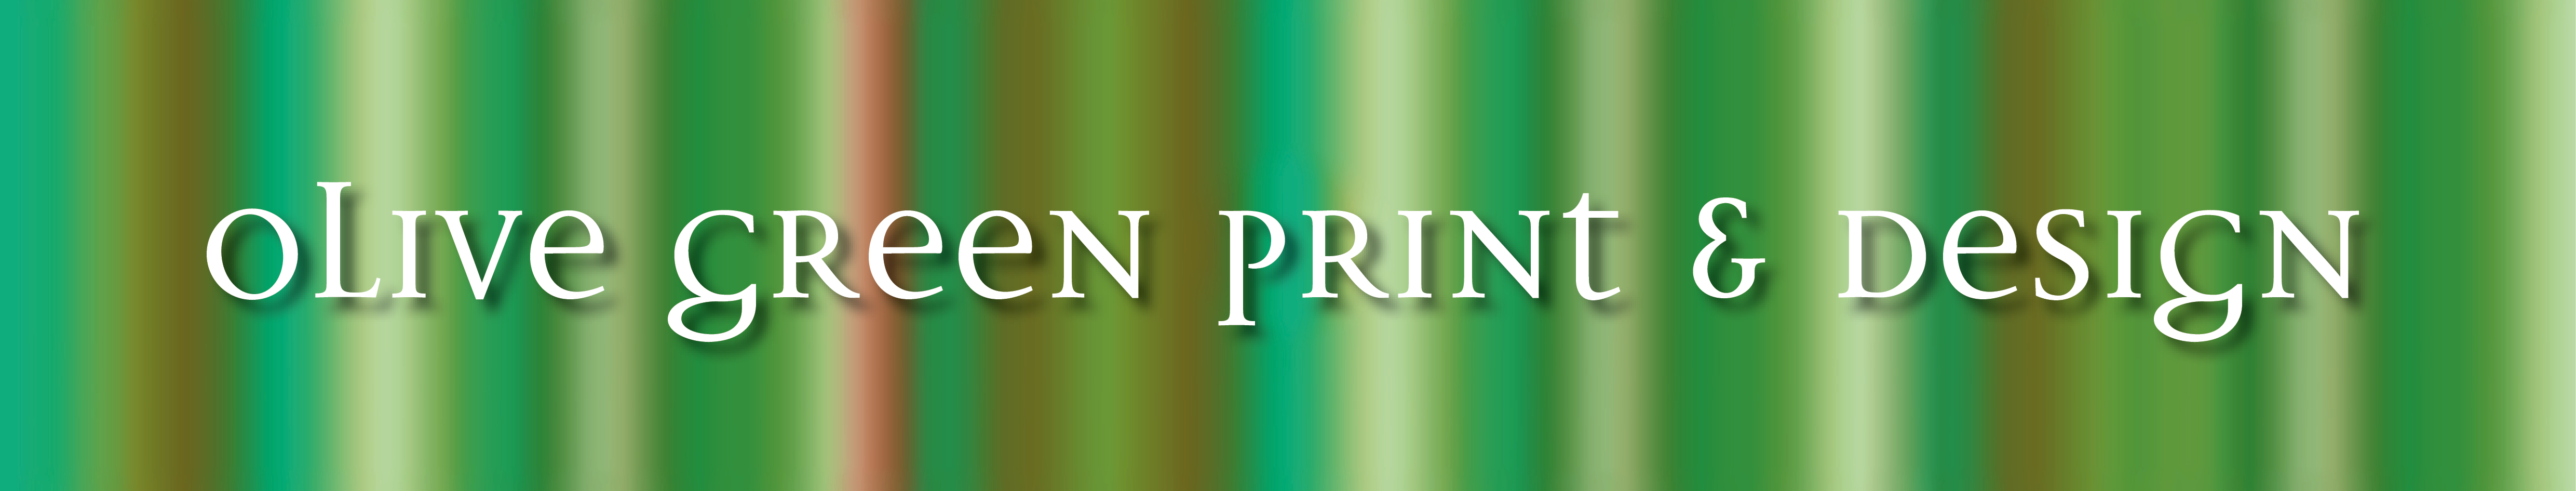 Olive Green Print & Design